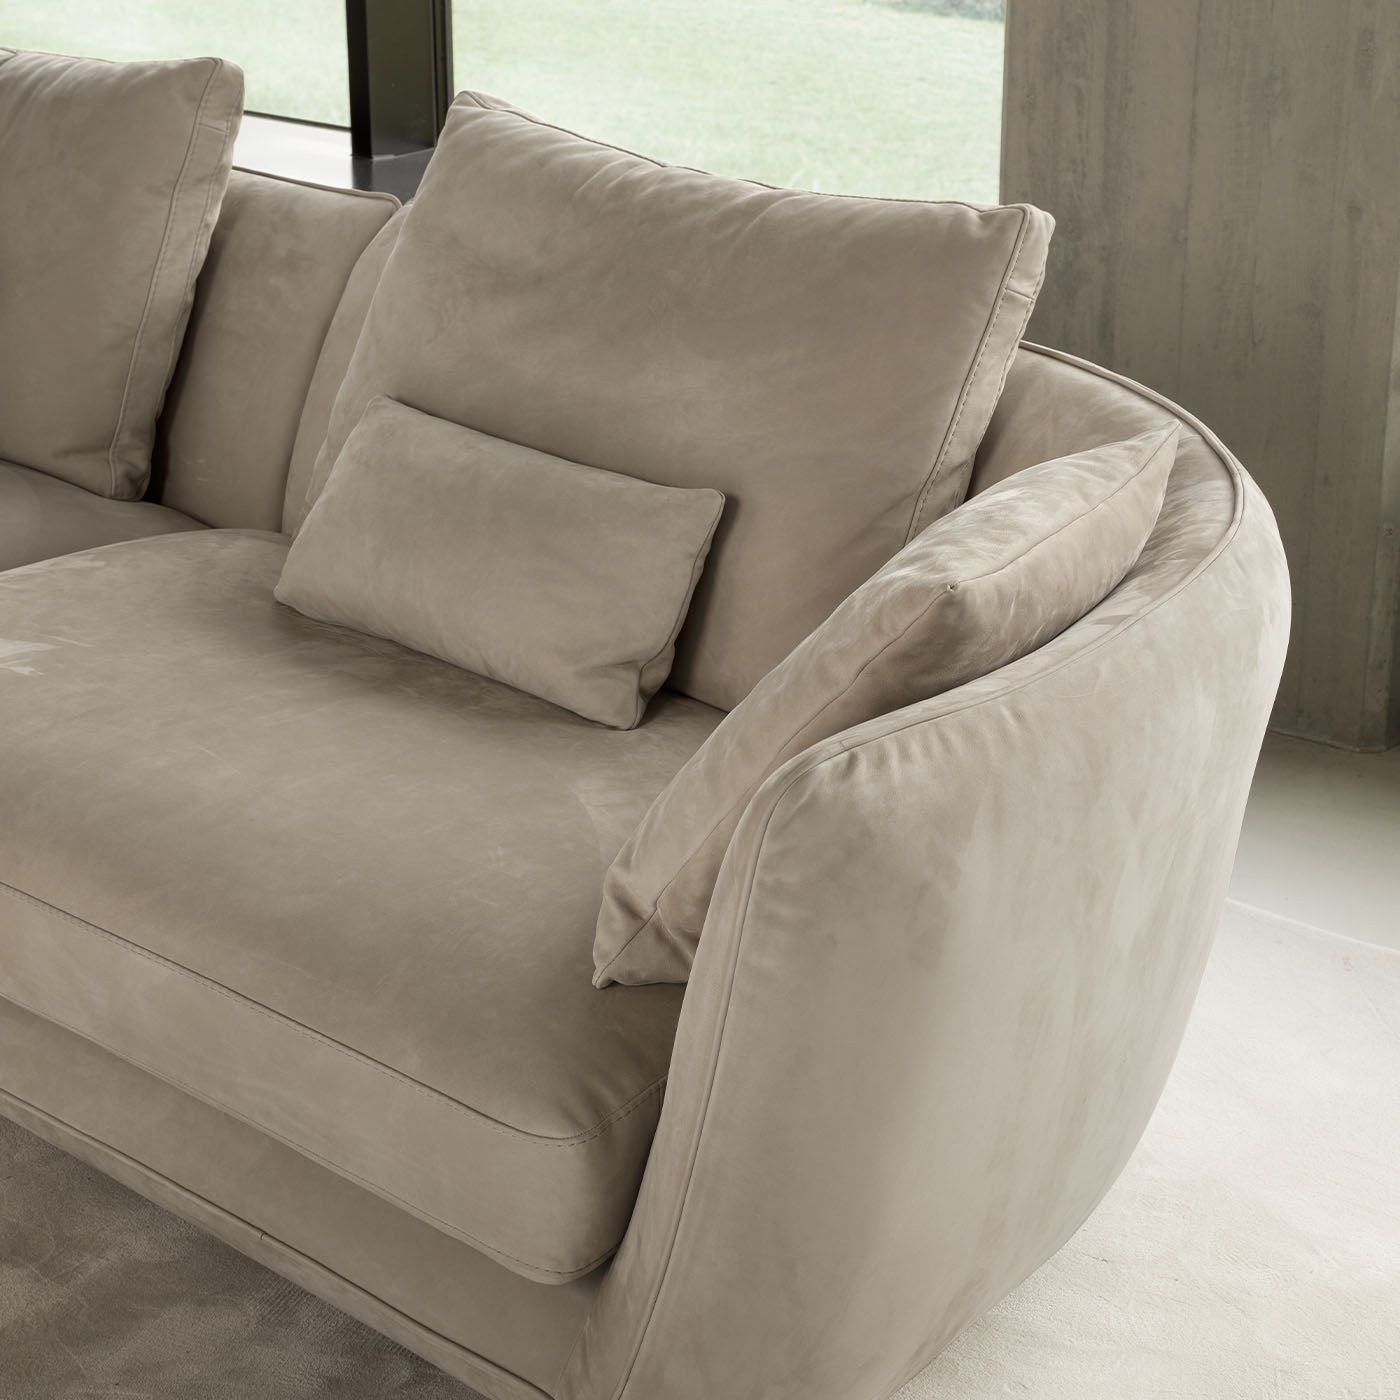 Creta Nubuck Leather Sofa by Palomba Serafini - Alternative view 4